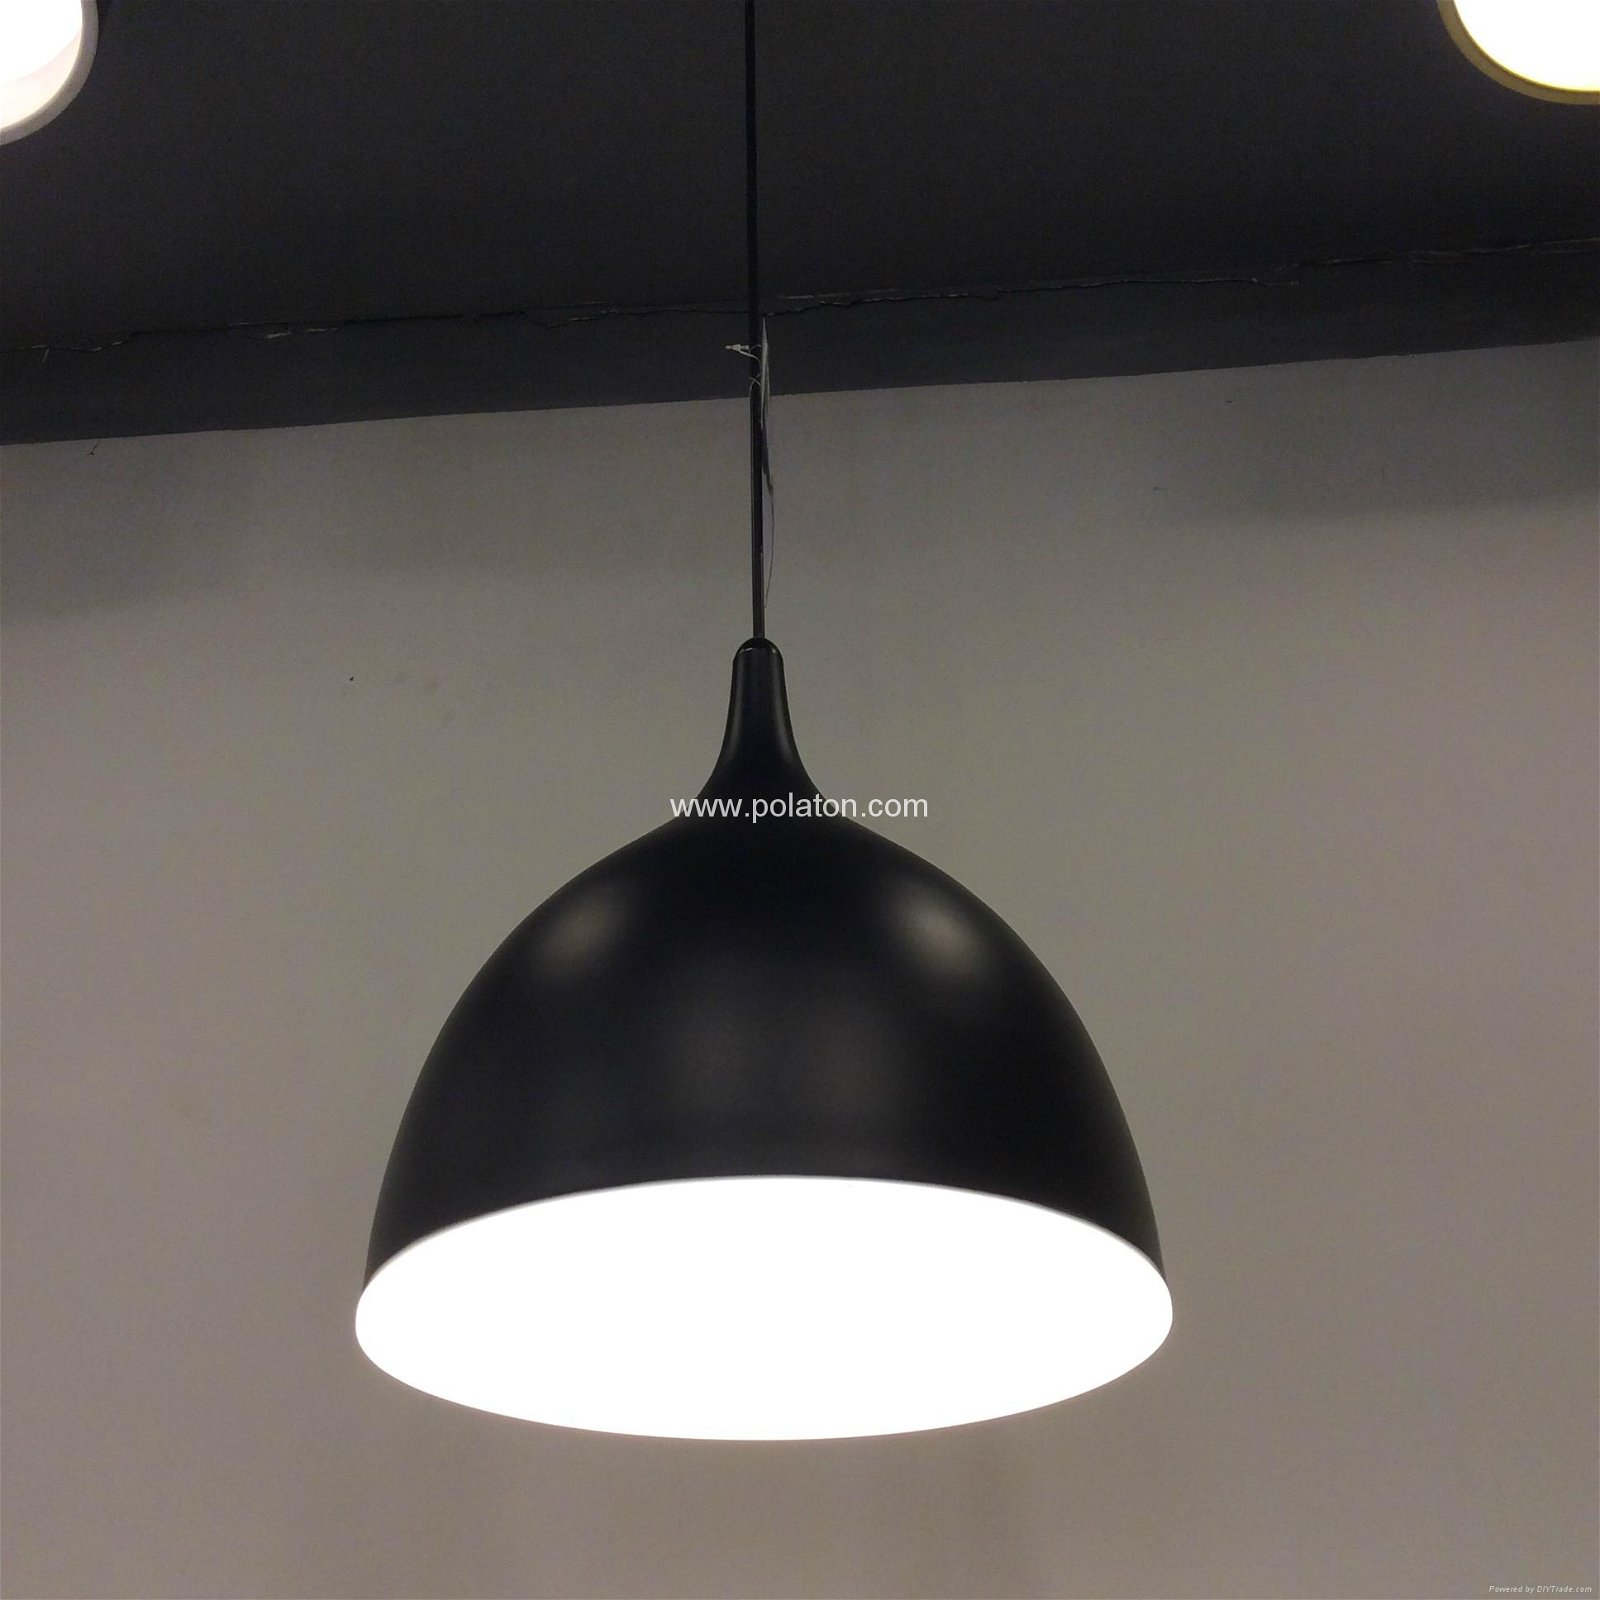 Philip Pendant Light for Kitchen Room Lighting Decorative 